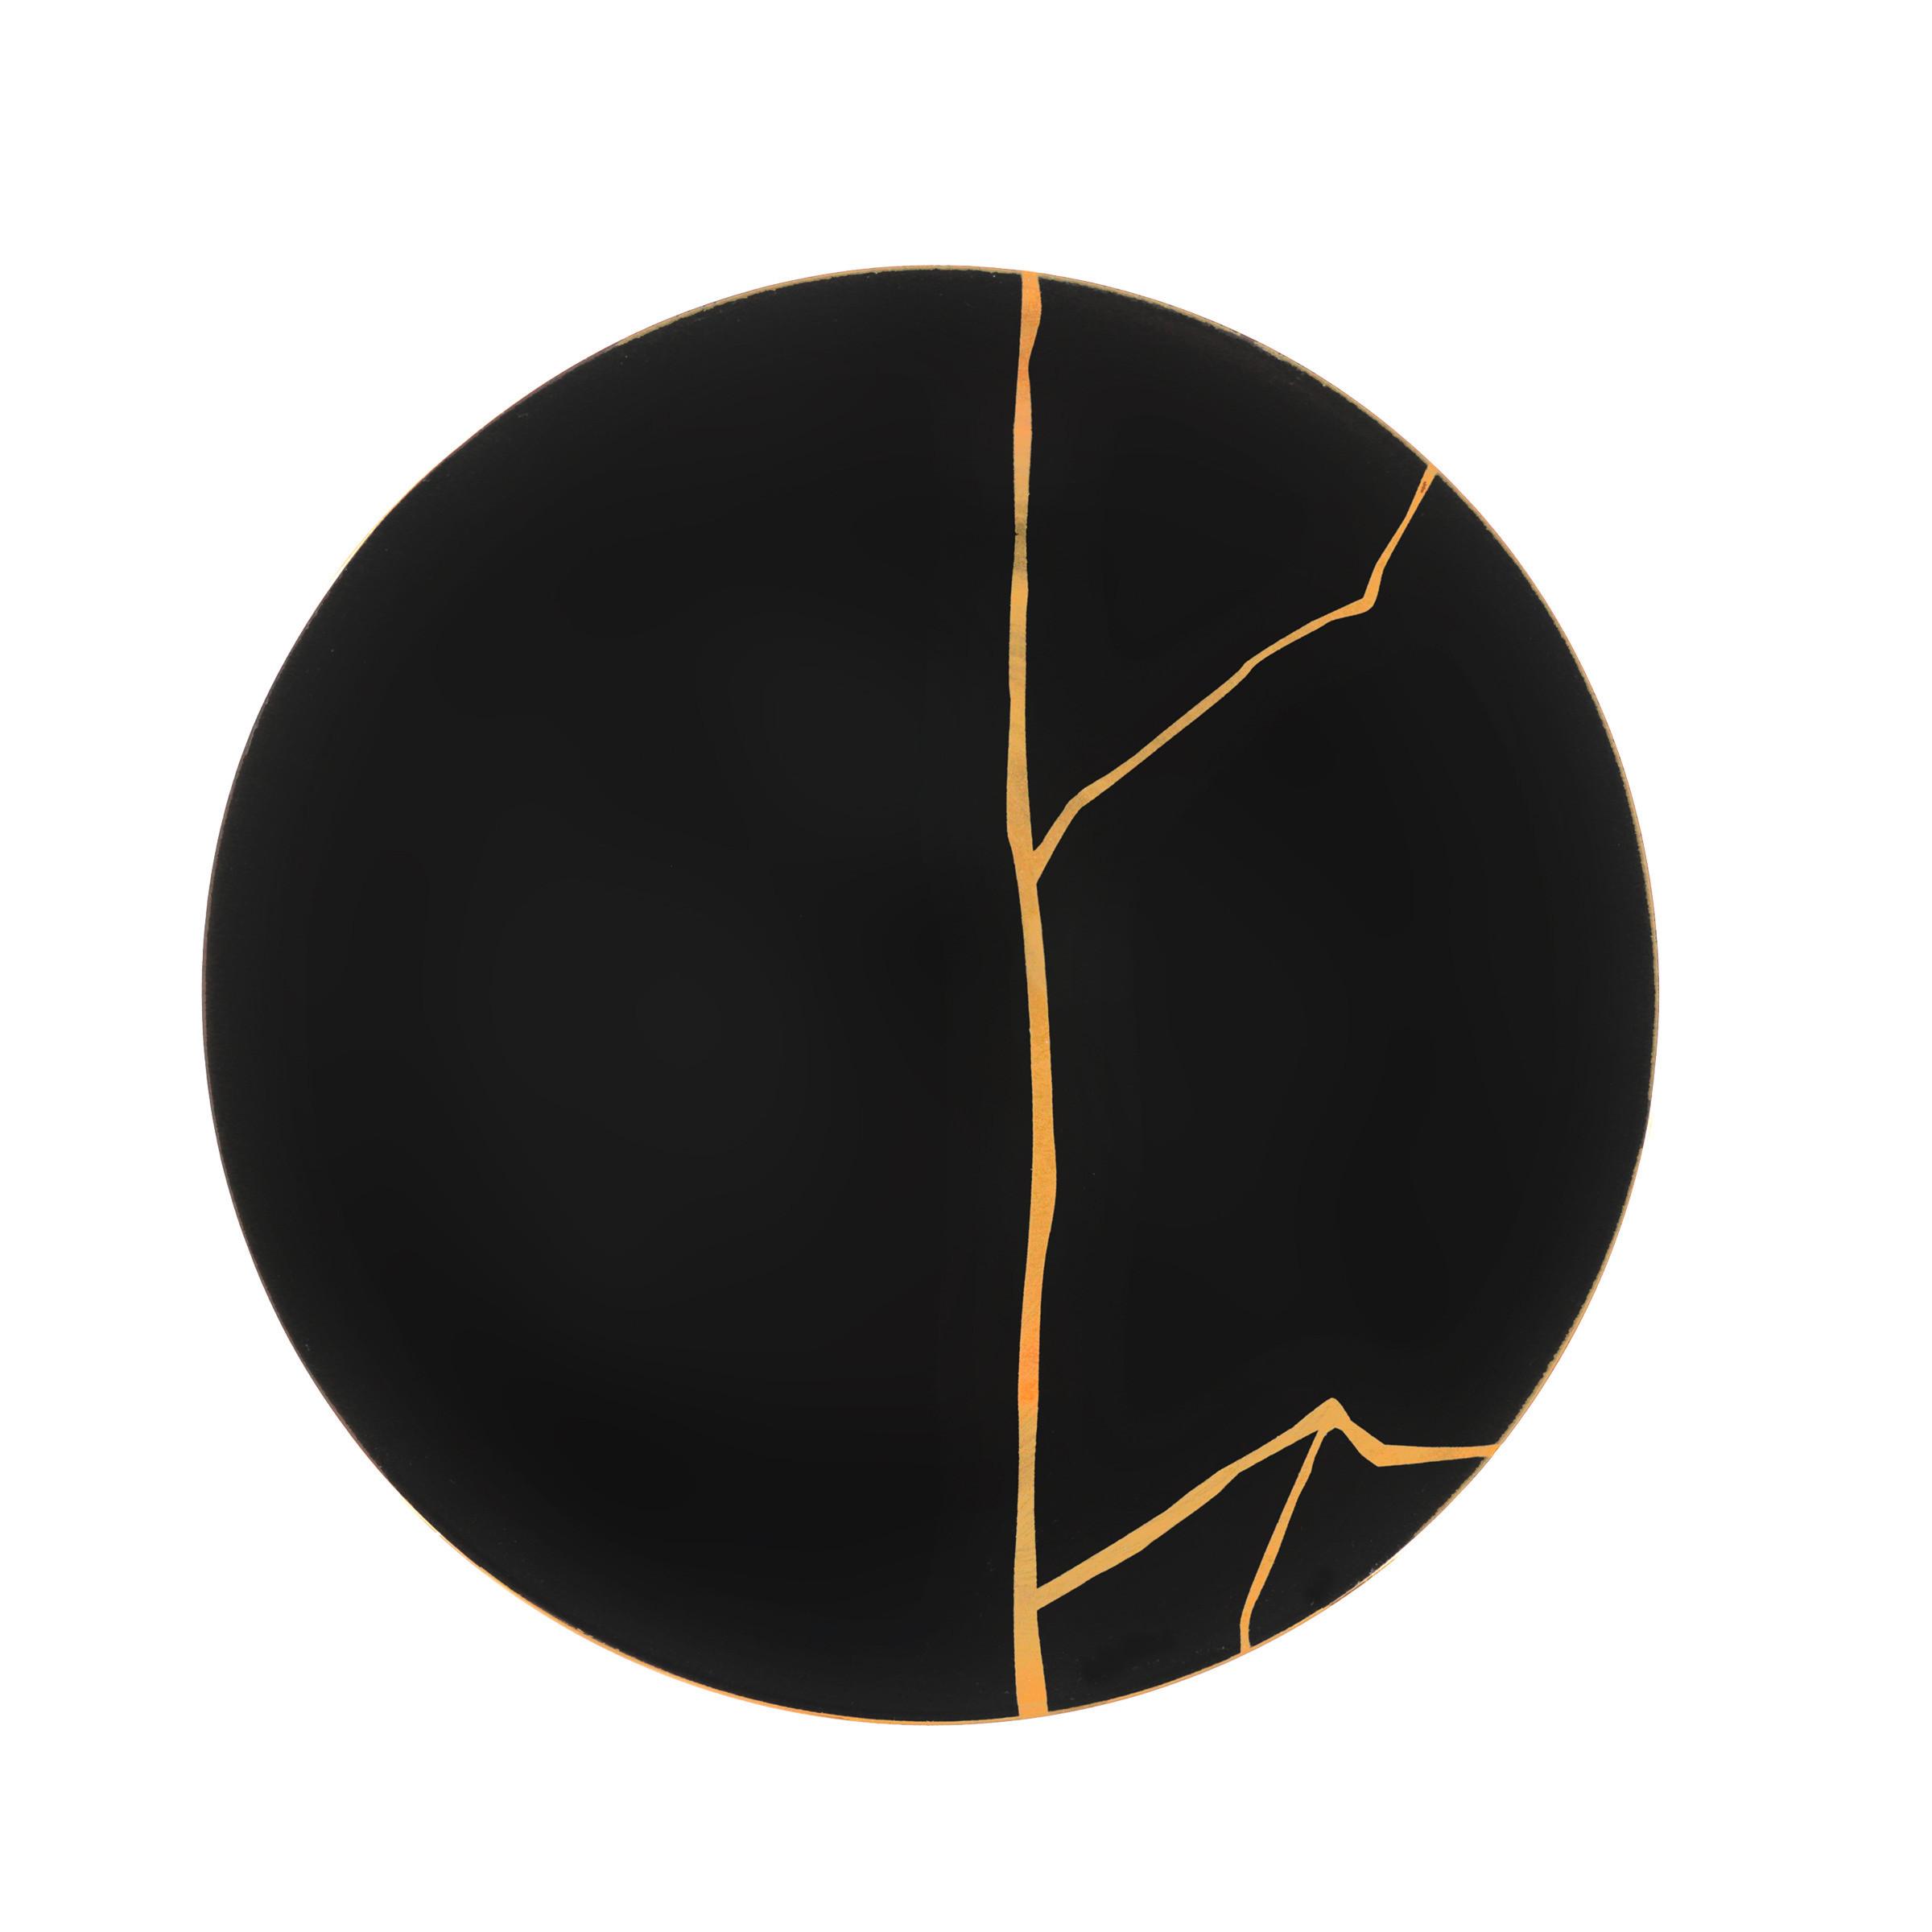 Plitki Tanjur 27 Cm Onix - zlatne boje/crna, Modern, keramika (27cm) - Premium Living